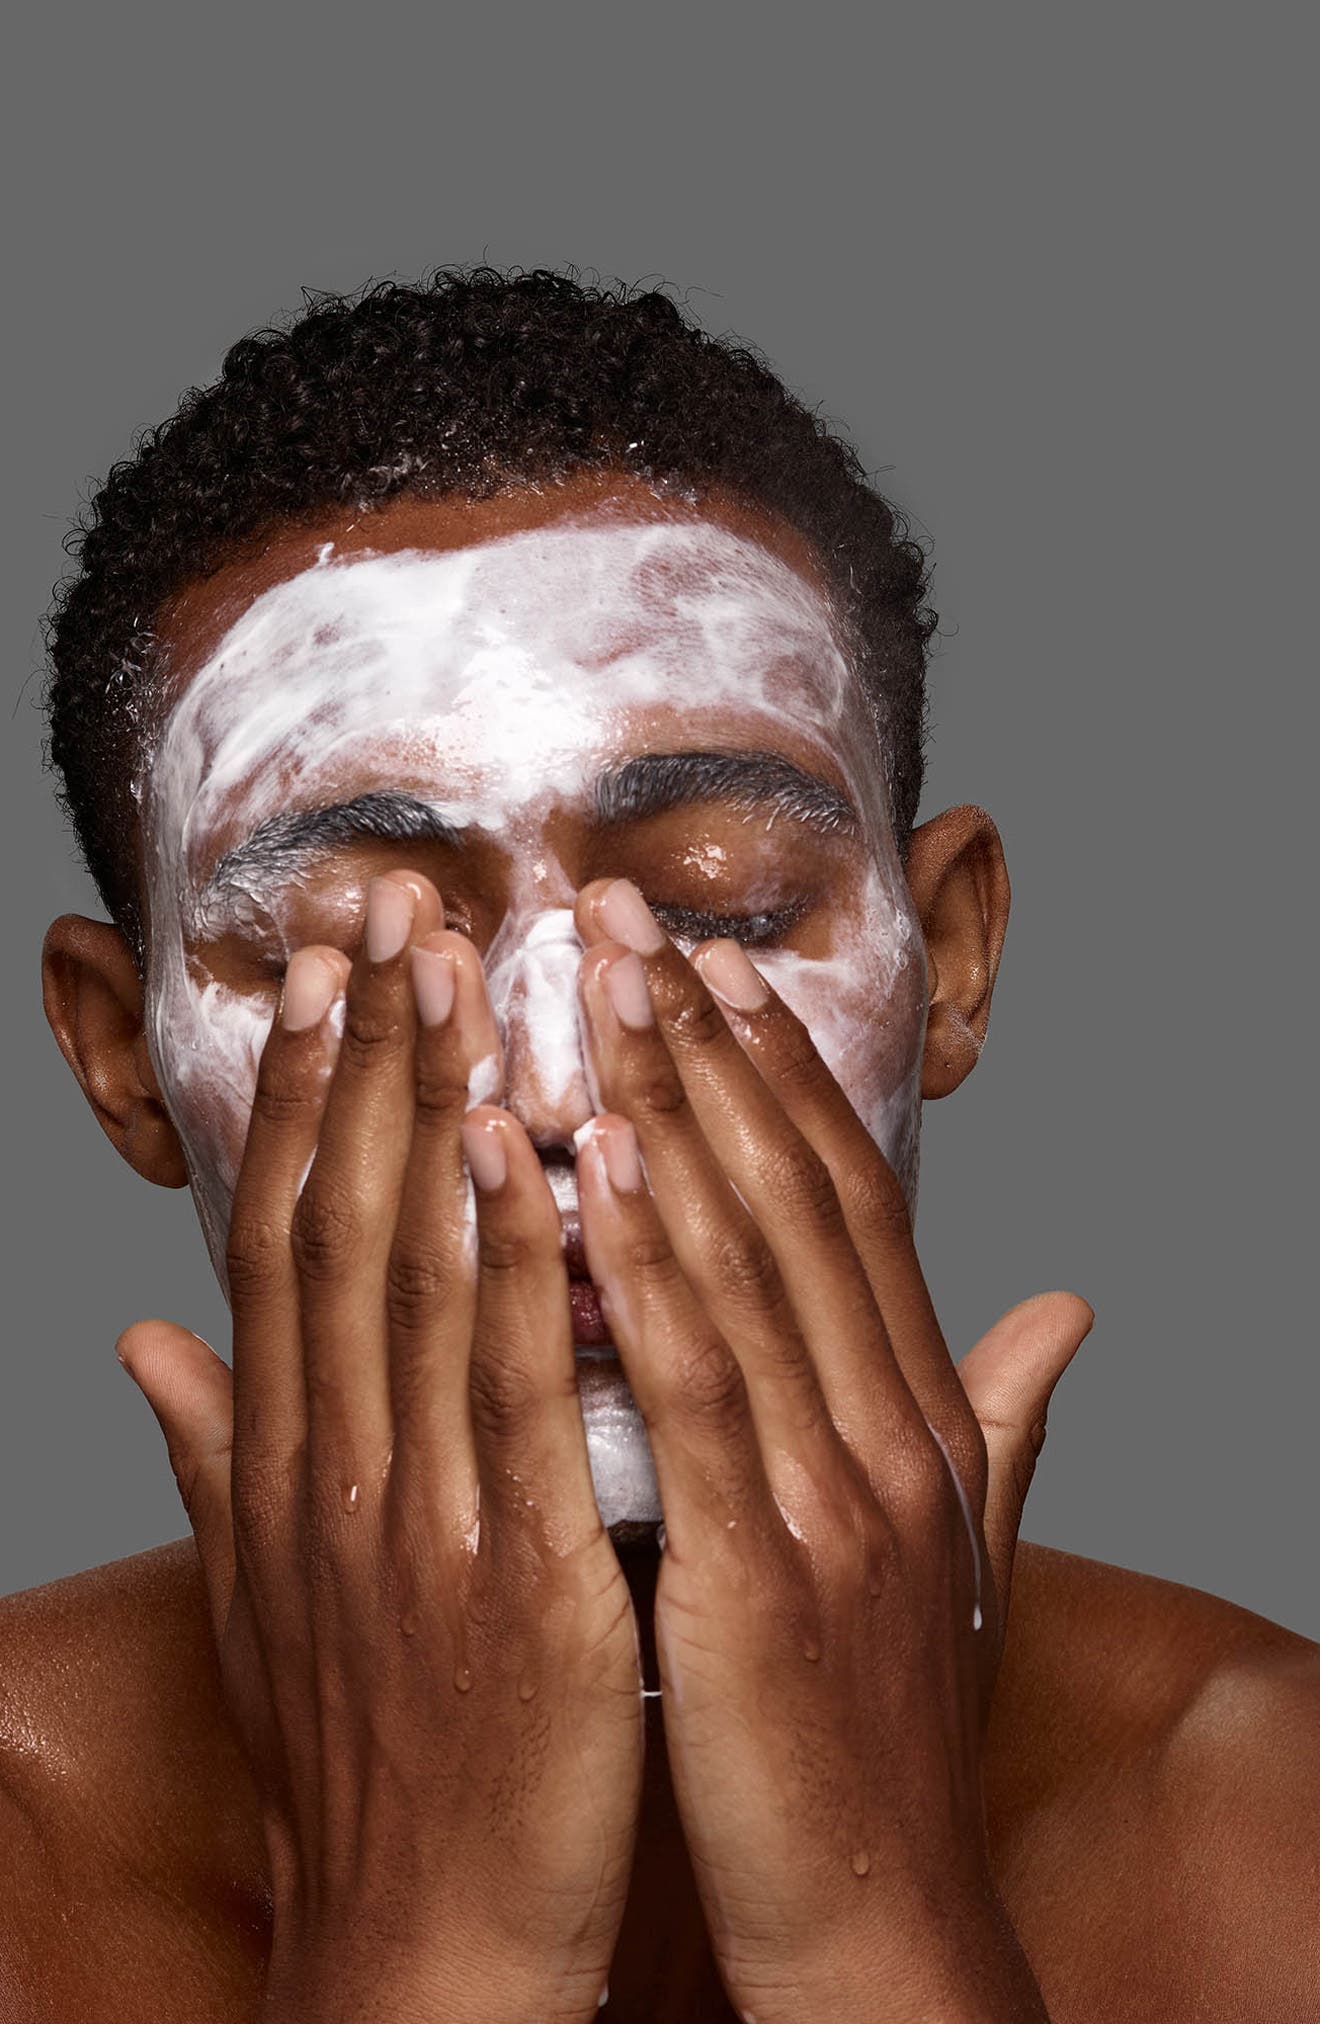 Lab Series Skincare for Men Anti-Age MAX LS Cleanser